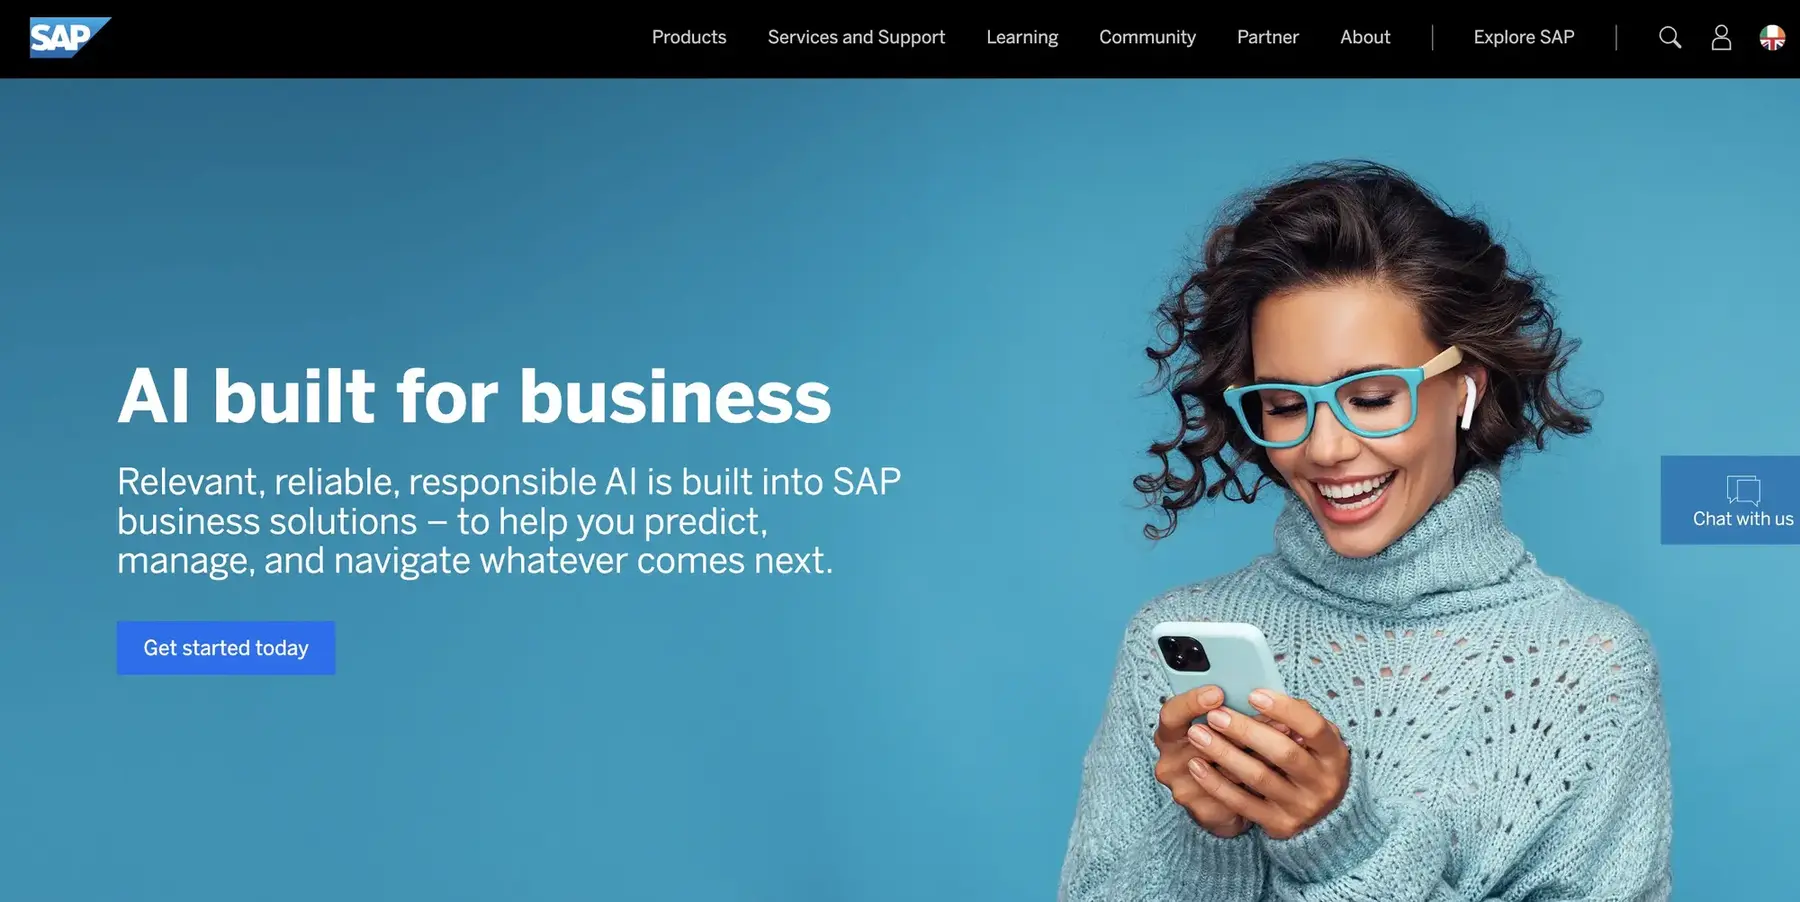 SAP software service companie
